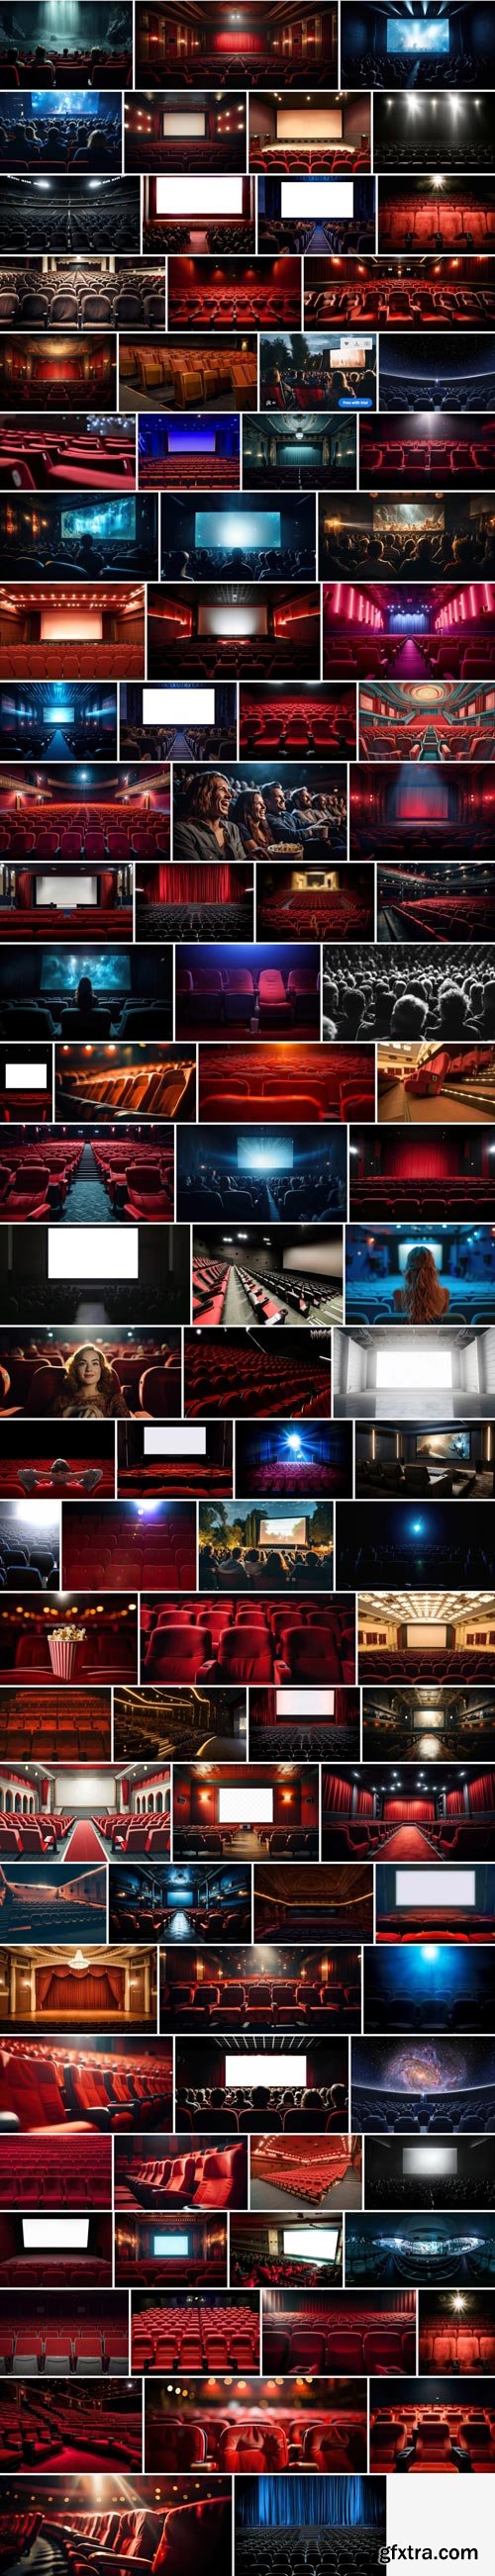 Amazing Photos, Empty Cinema Auditorium 100xJPEG